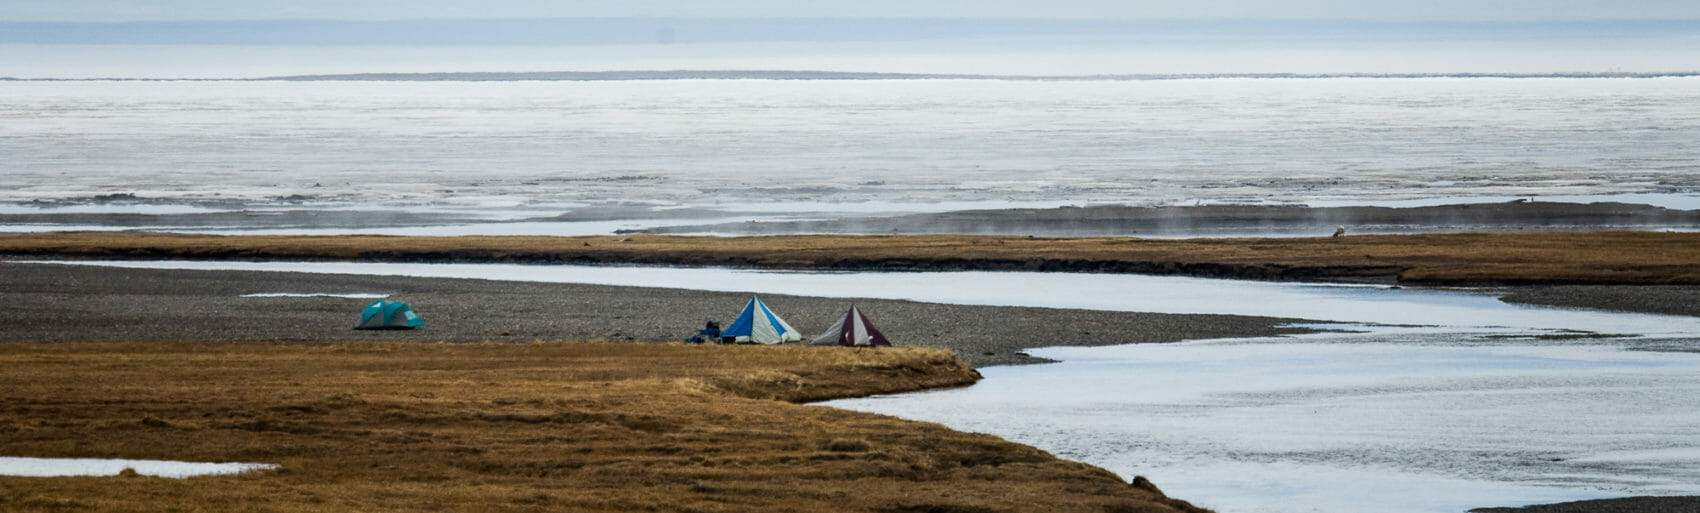 camping along the arctic coast in Alaska